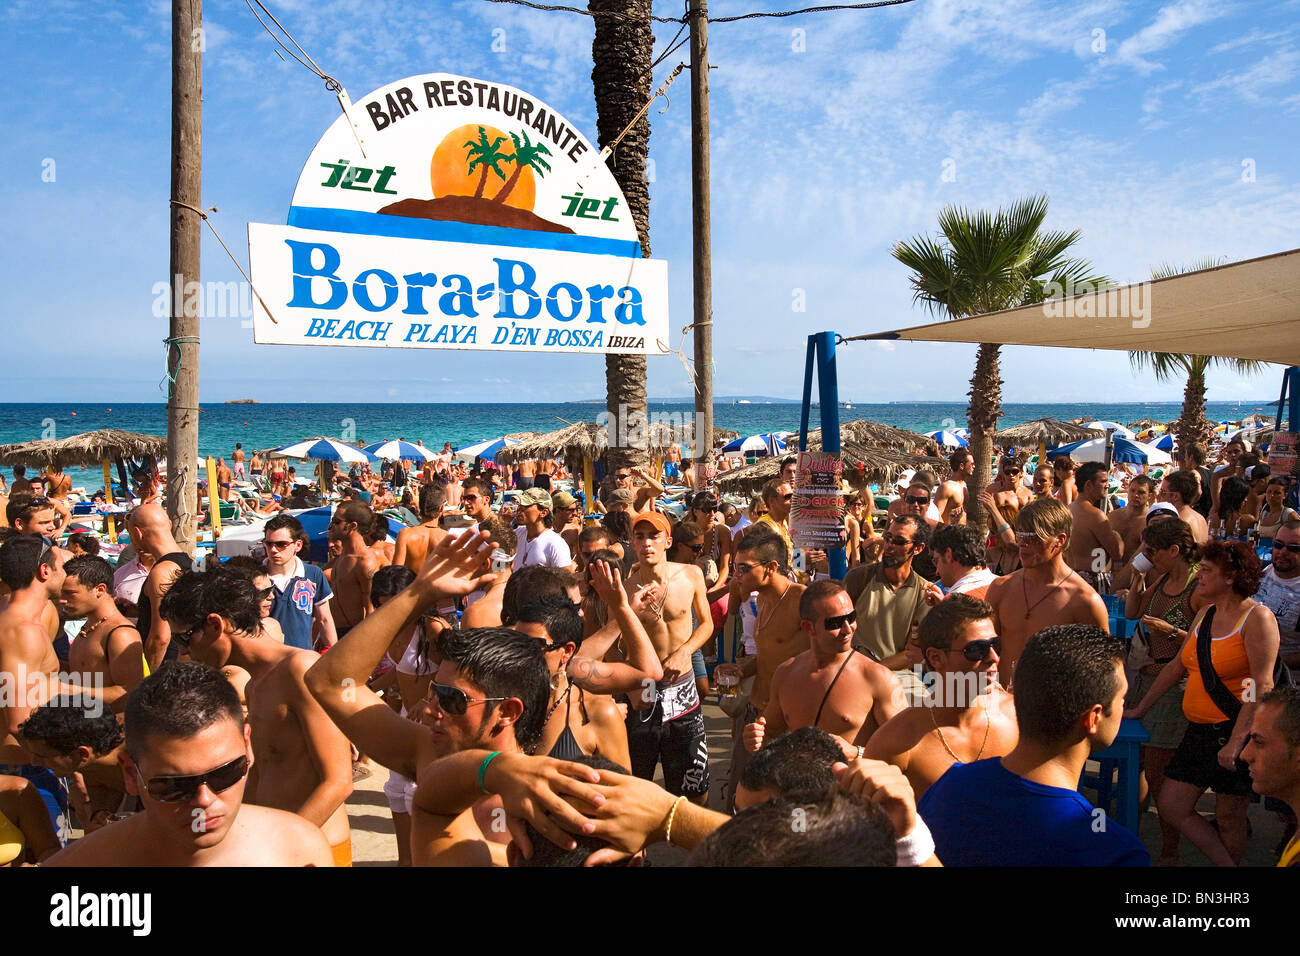 Beachbar Bora-Bora, Platja den Bossa, Ibiza, Spain, elevated view Stock  Photo - Alamy